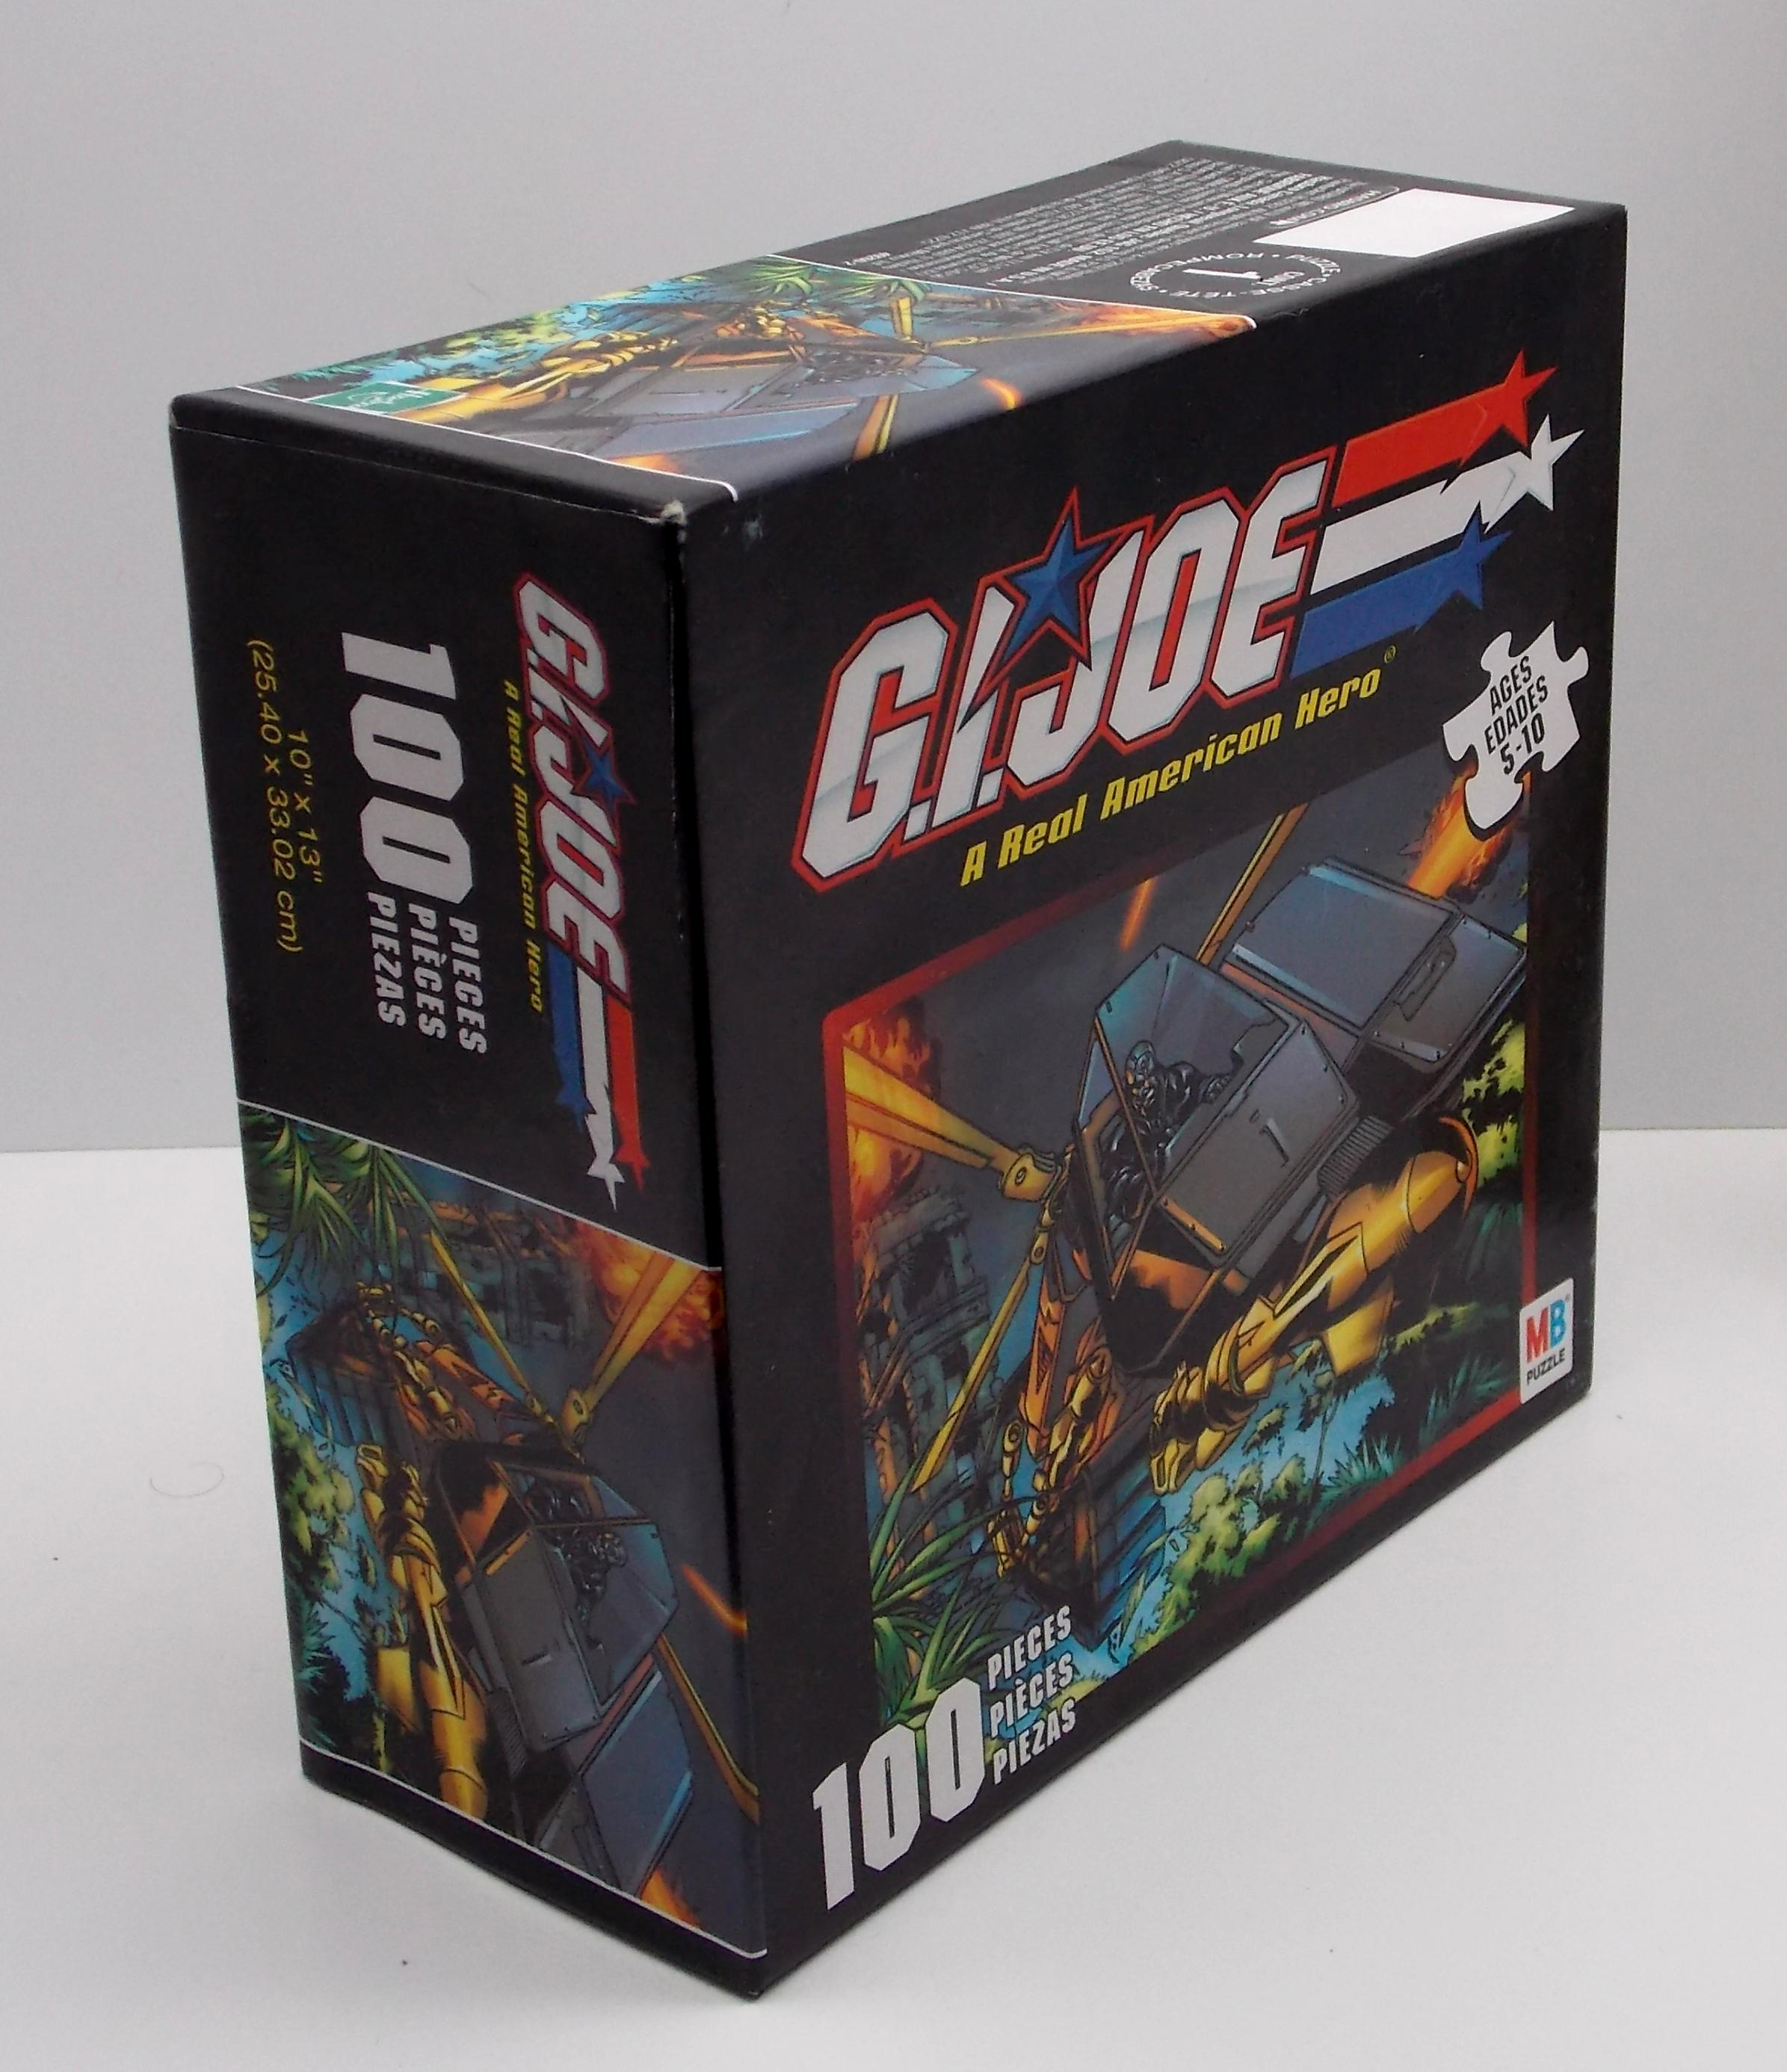 G.I. Joe 2002 Joe Vs. Cobra 100 Piece Destro's Dominator Puzzle Set